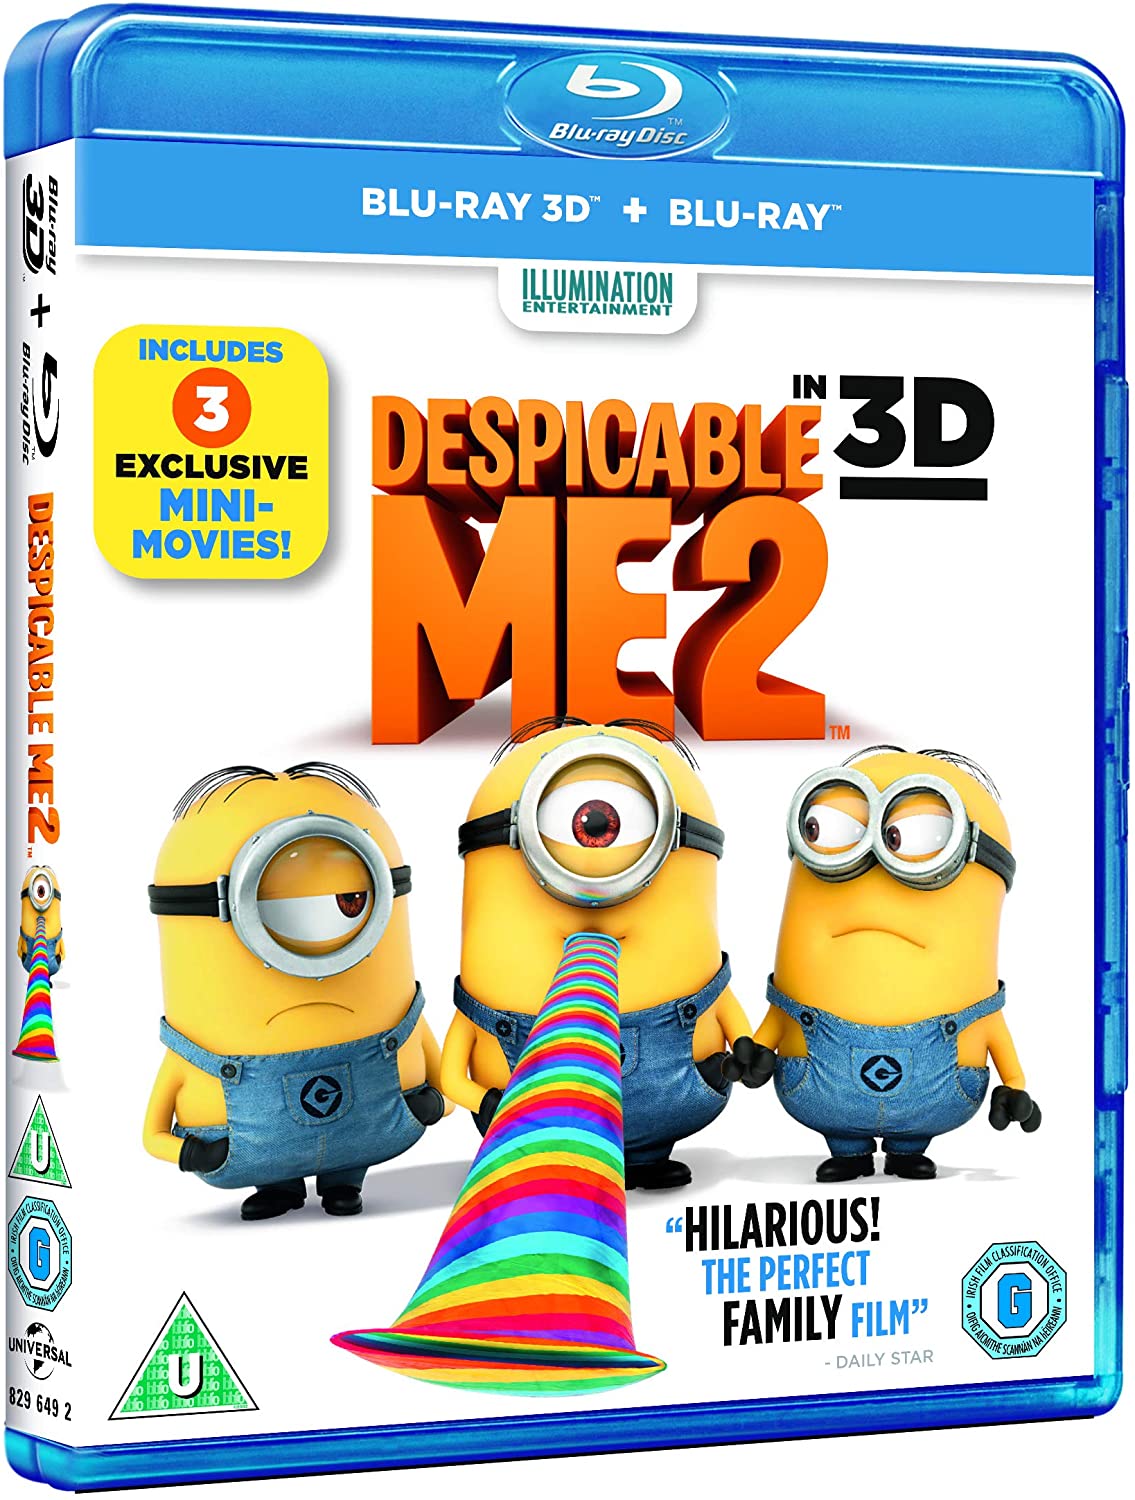 Despicable Me 2 (Illumination) (3D + 2D Blu-ray)